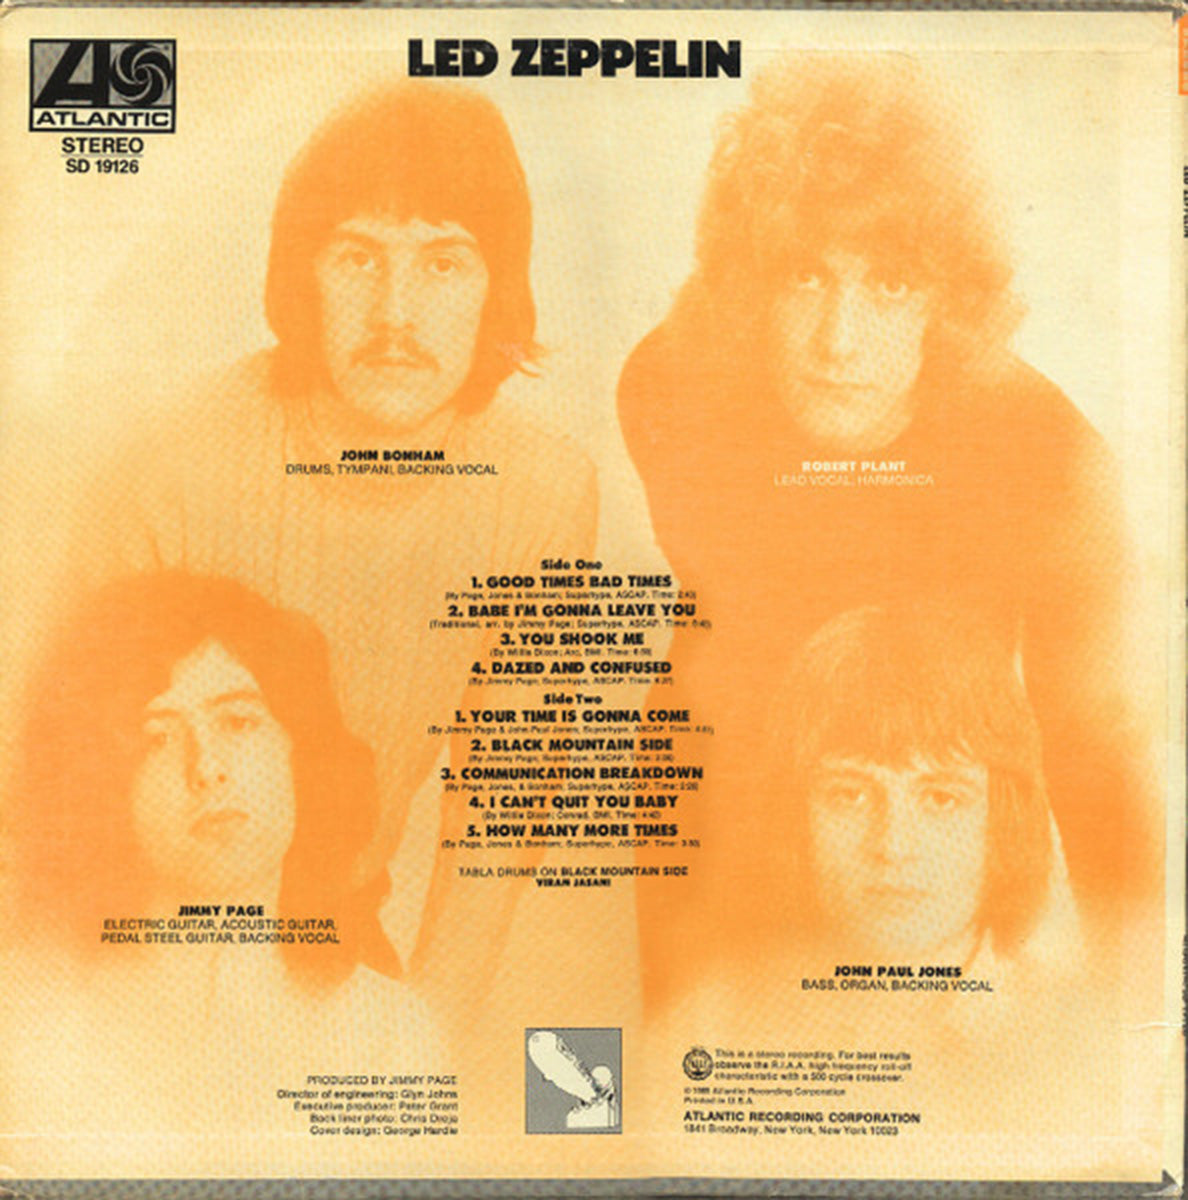 Led Zeppelin – Led Zeppelin US Pressing - RARE SEALED 1977 Pressing